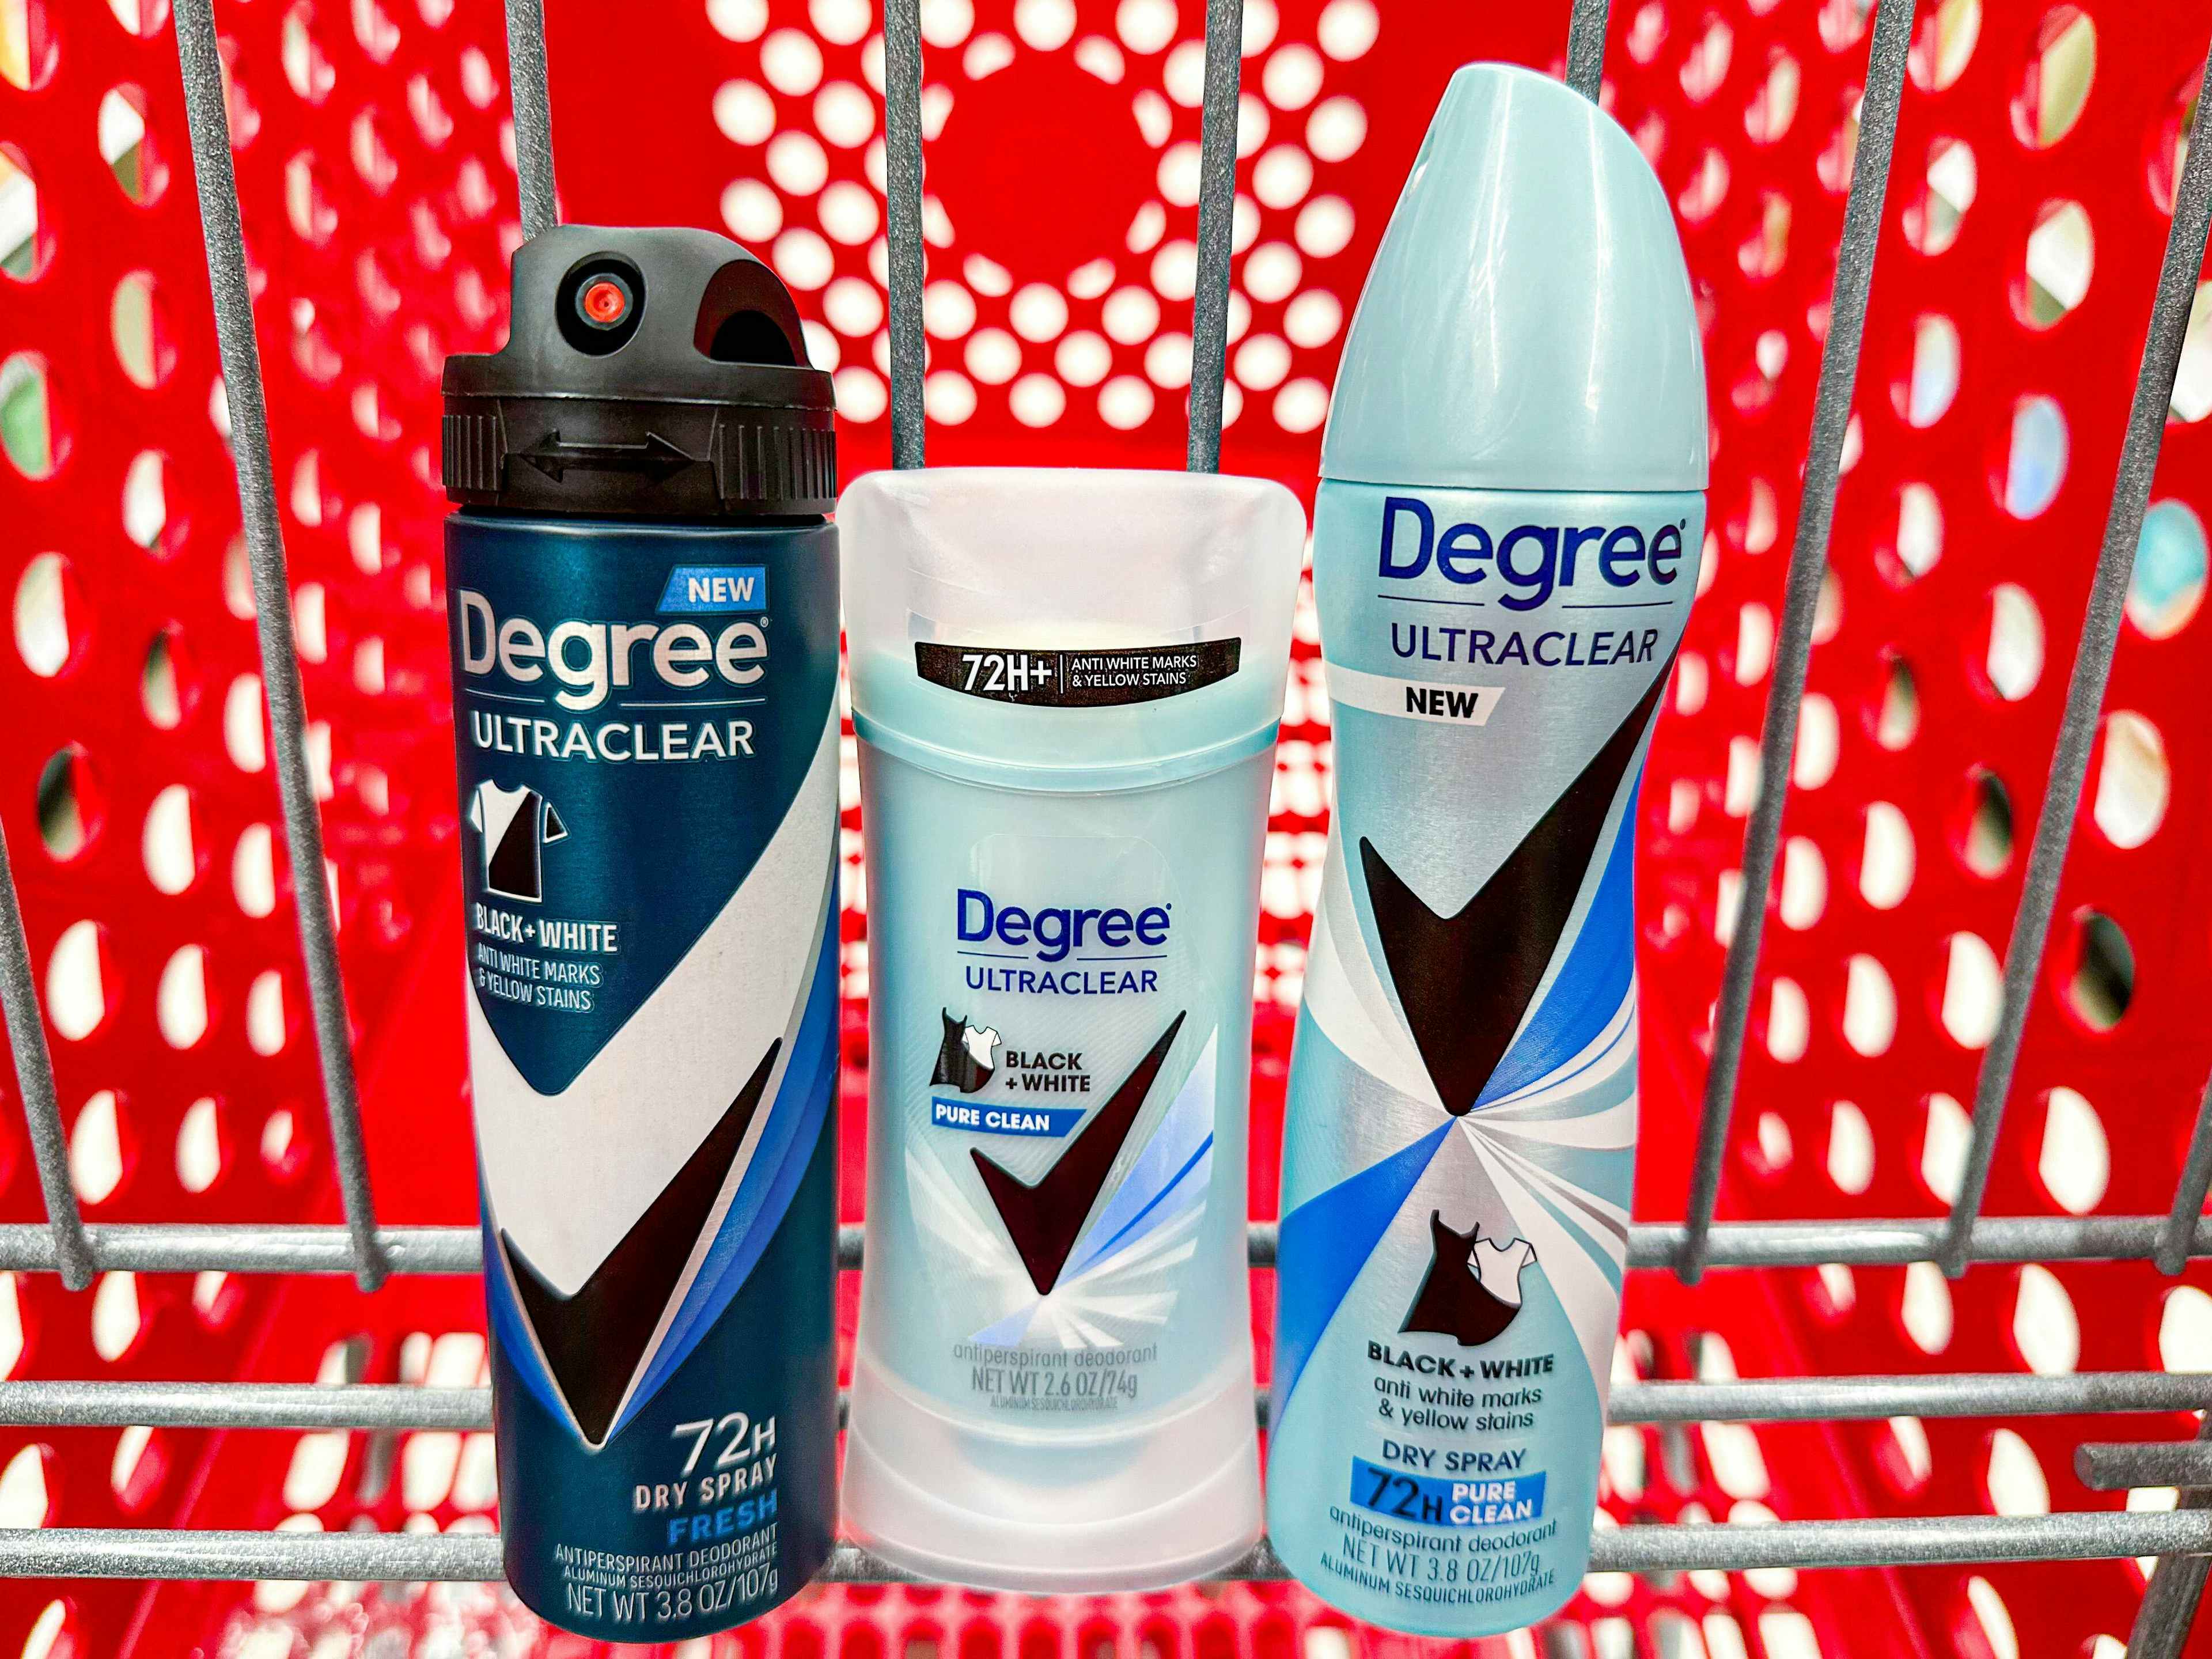 target-degree-sponsored-black-white-deodorant-stick-spray-1